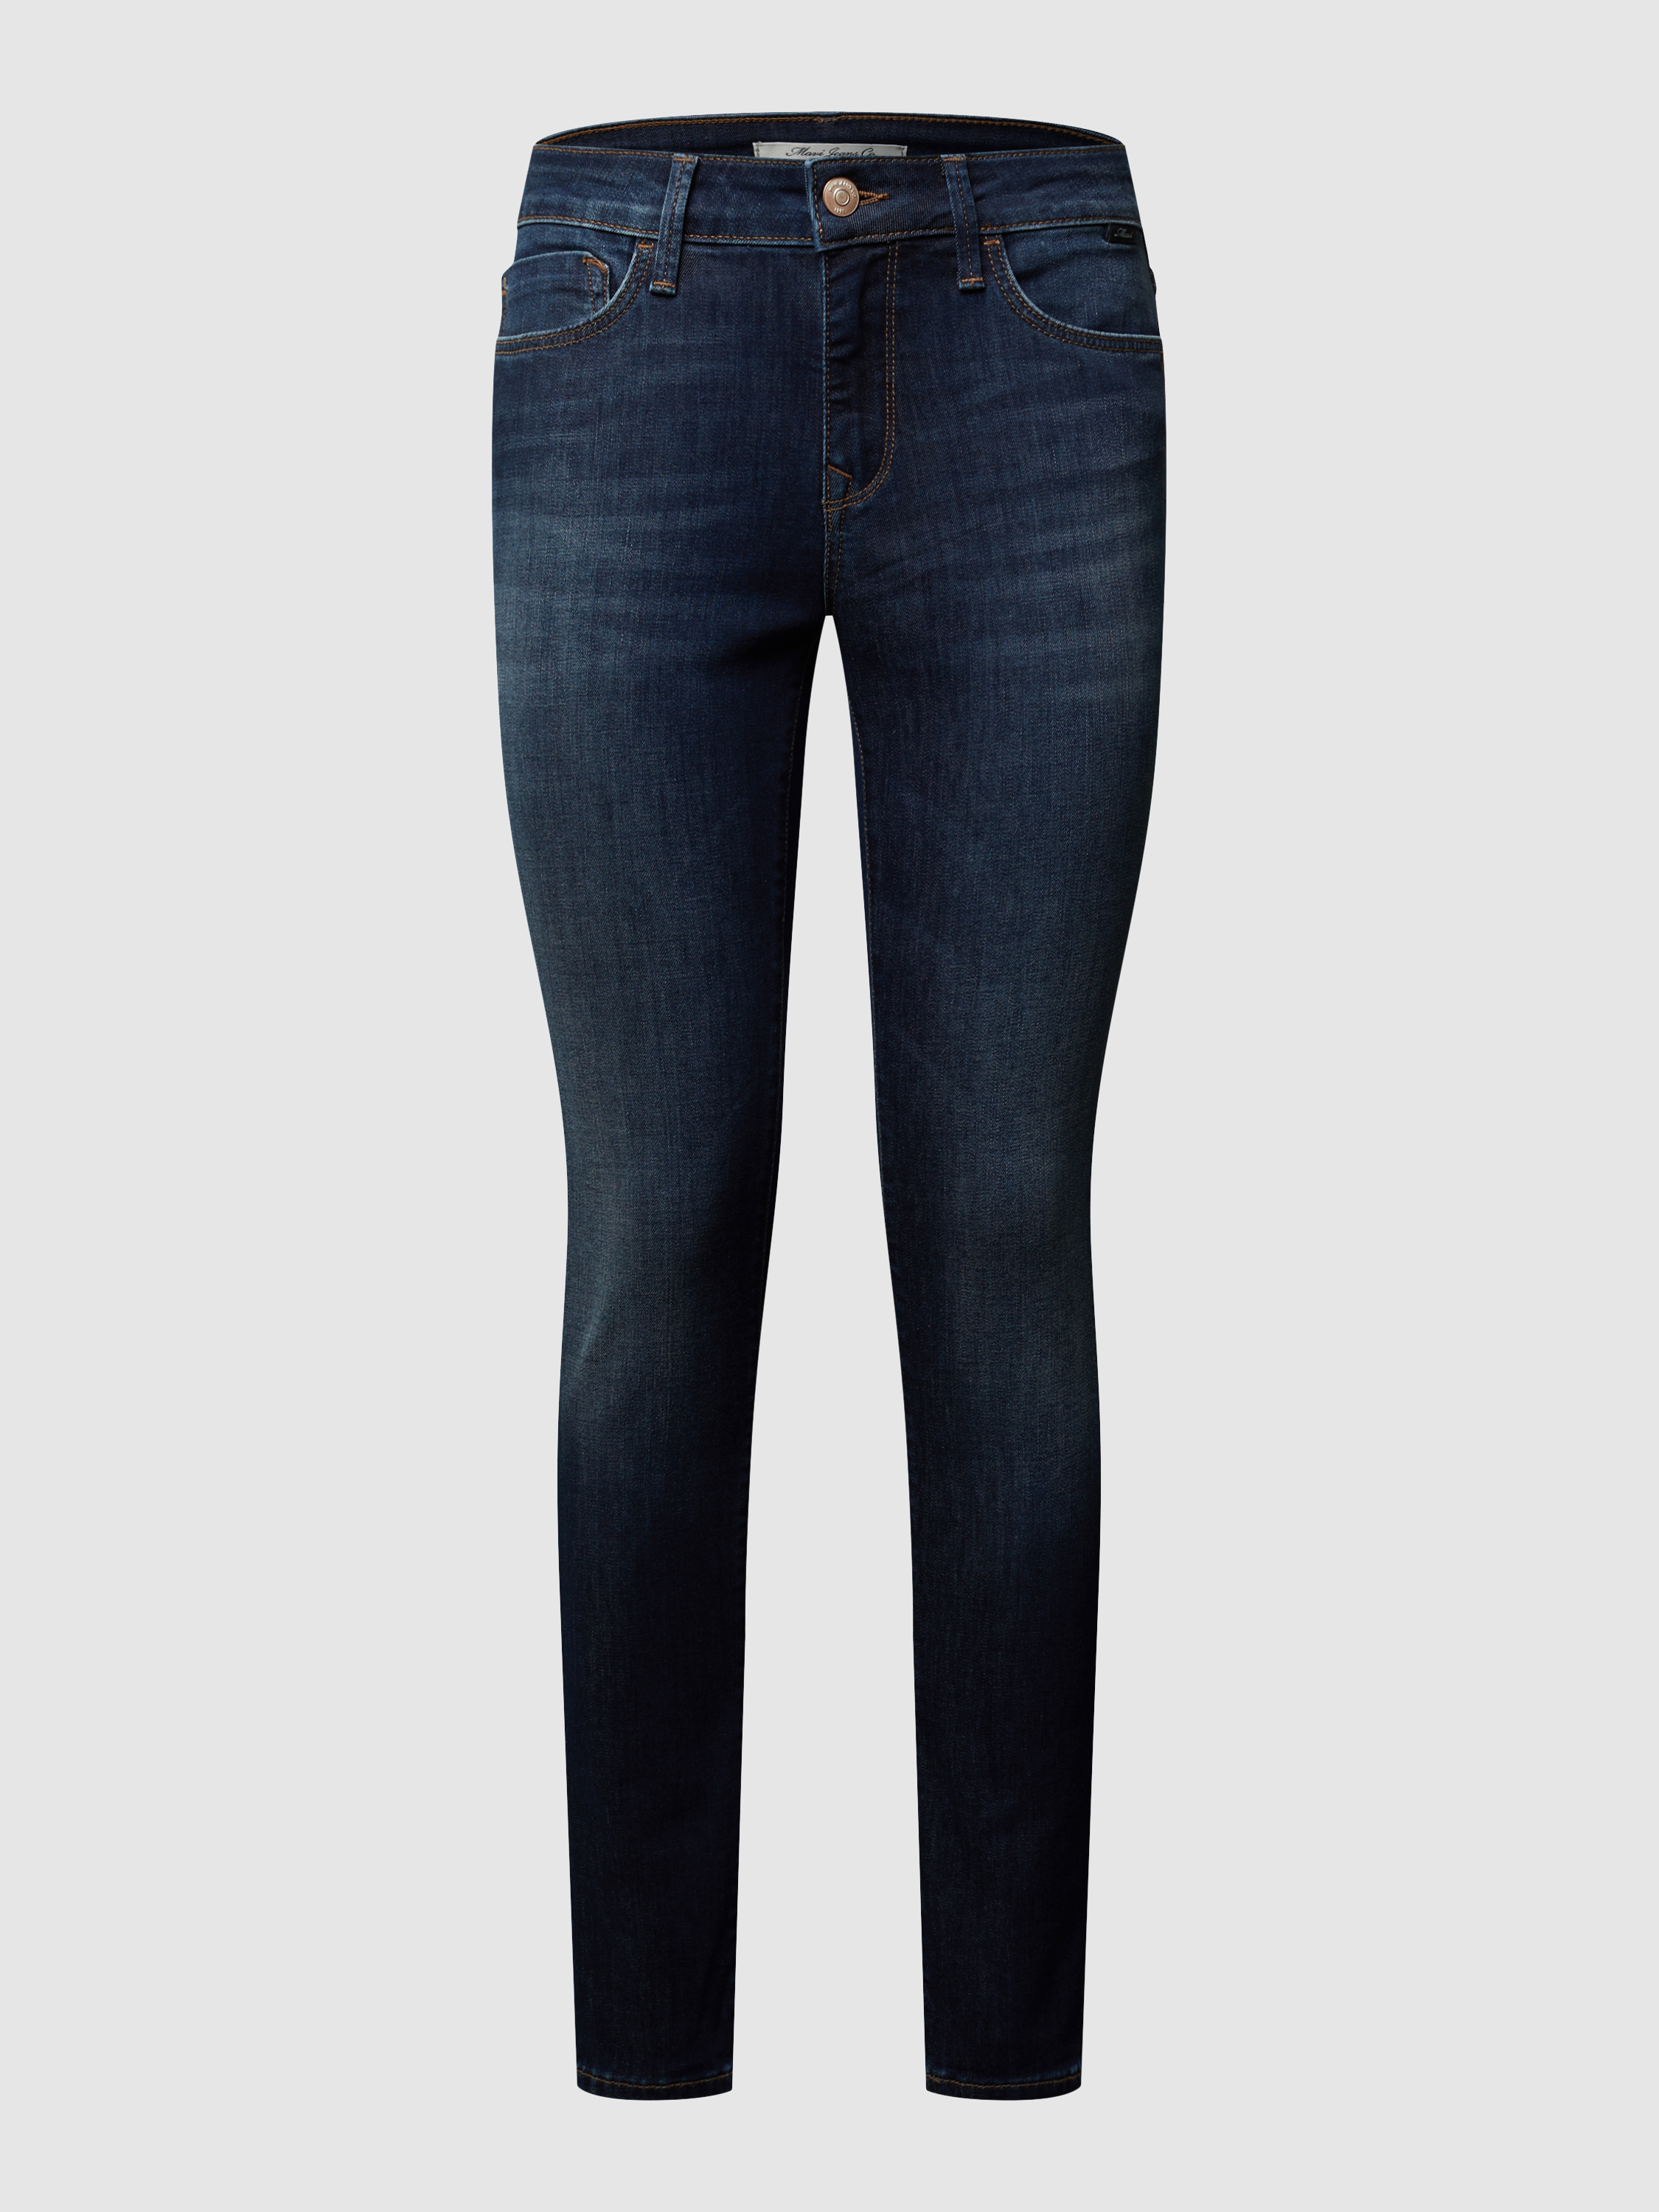 Джинсы женские mavi jeans 1257144 синие 24/28 (доставка из-за рубежа)